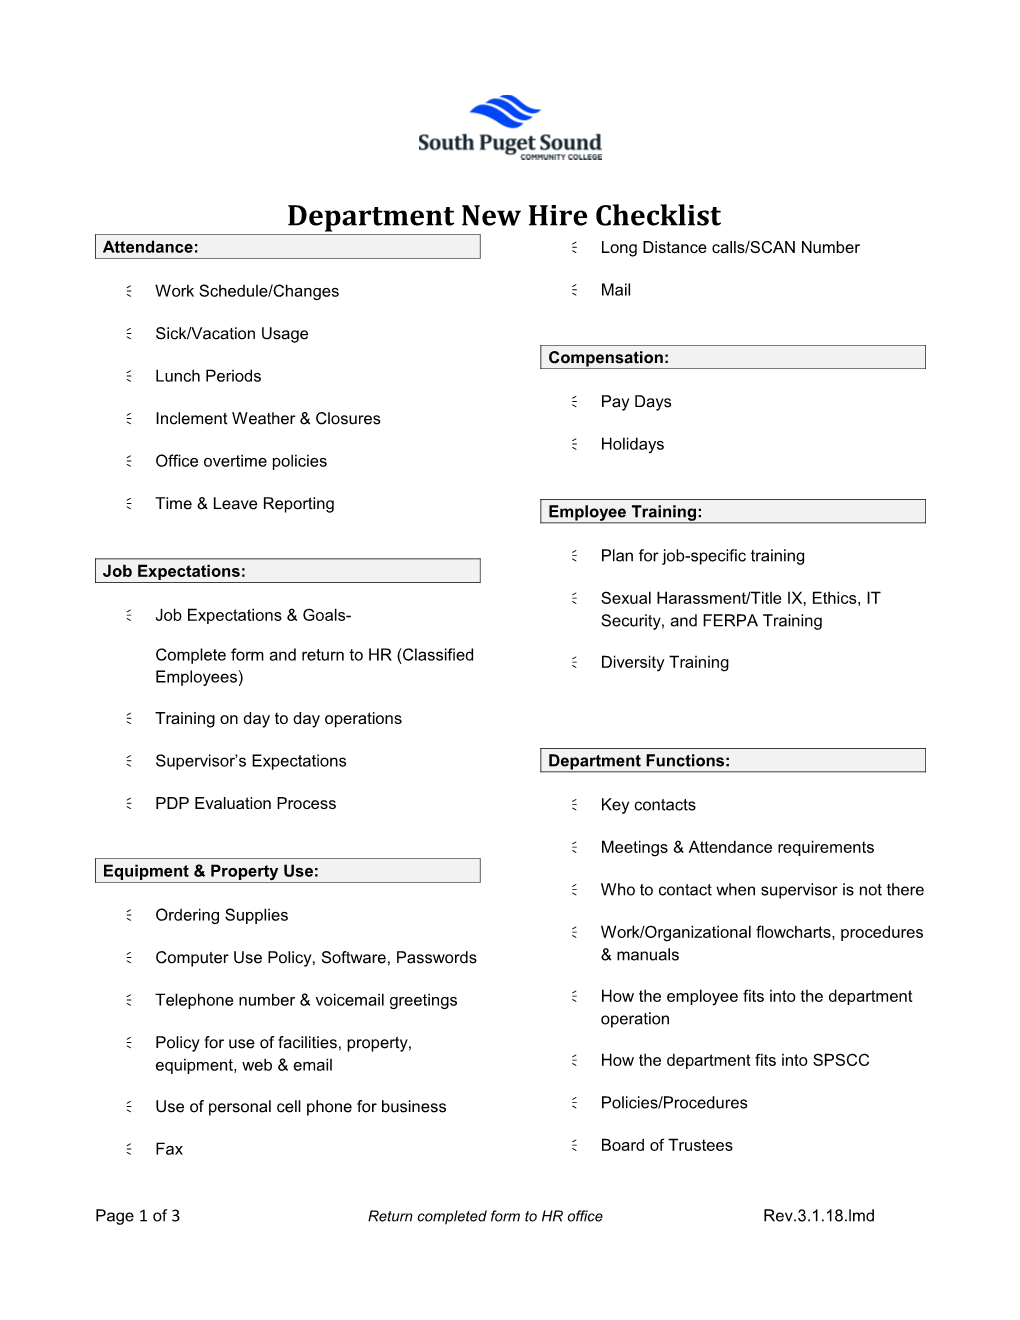 Department New Hire Checklist